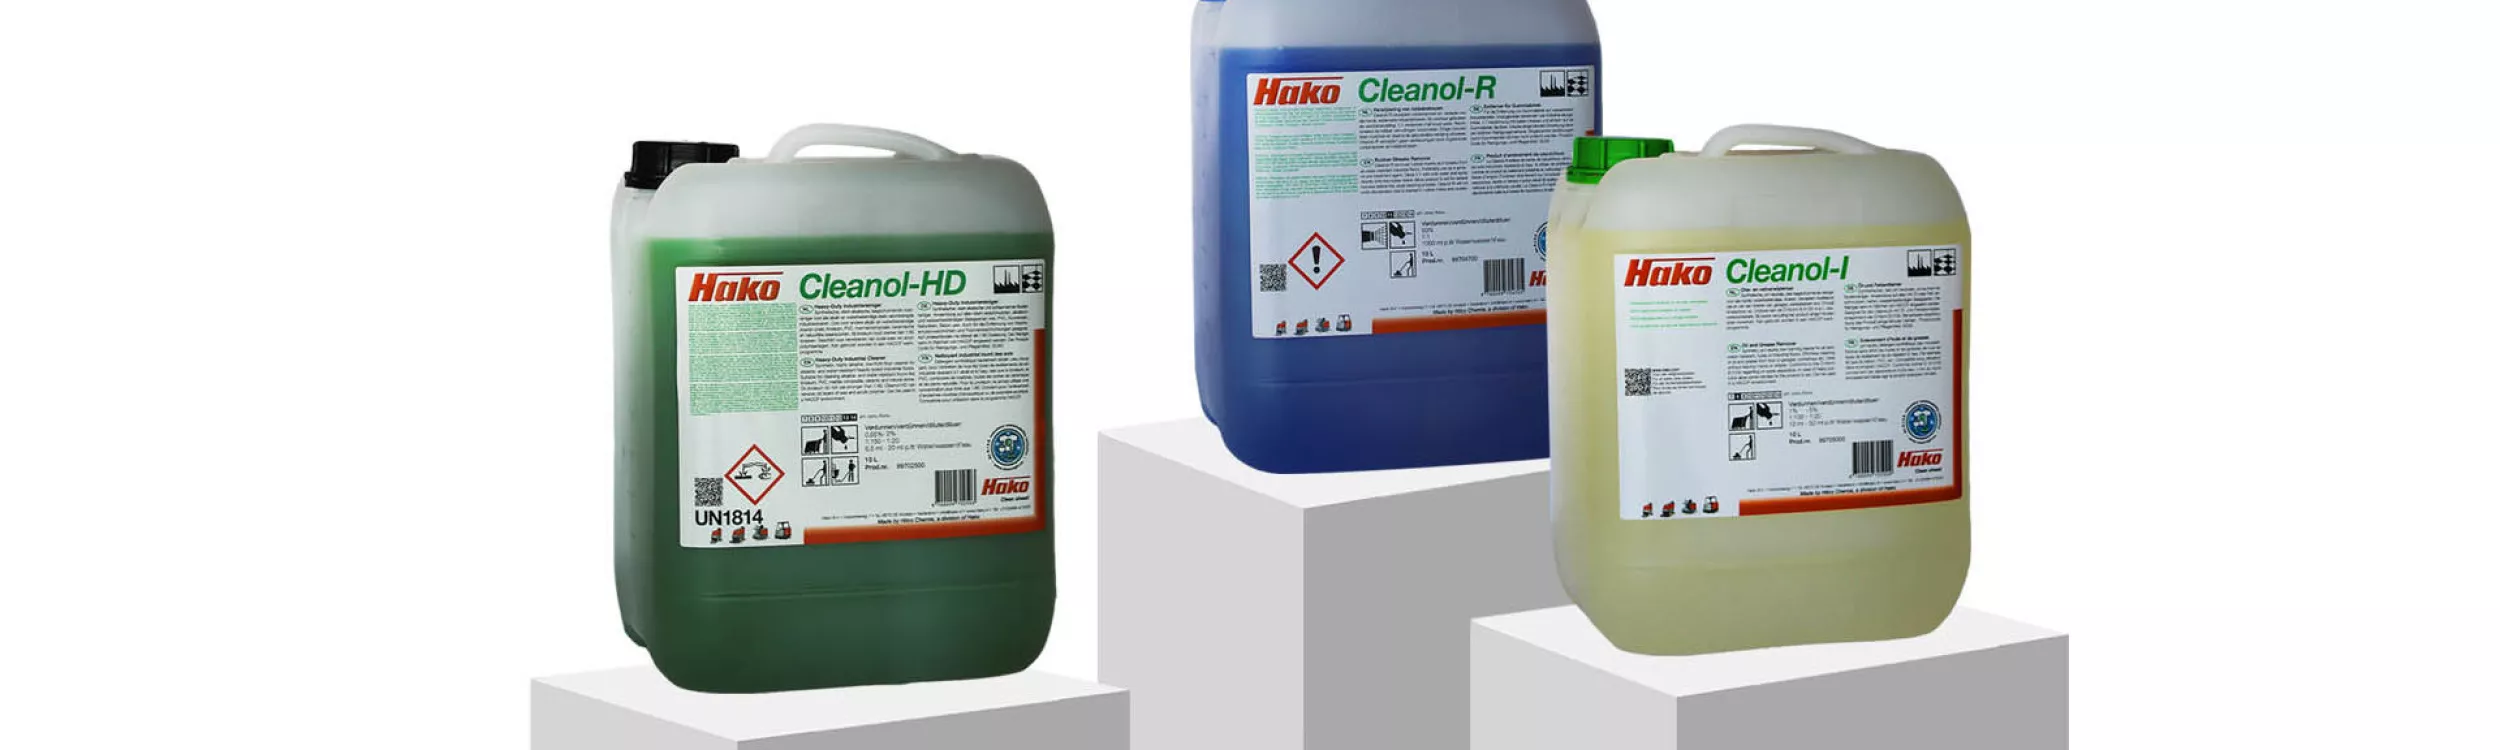 Produits de nettoyage industriel Hilco chimie Hako - Hako France